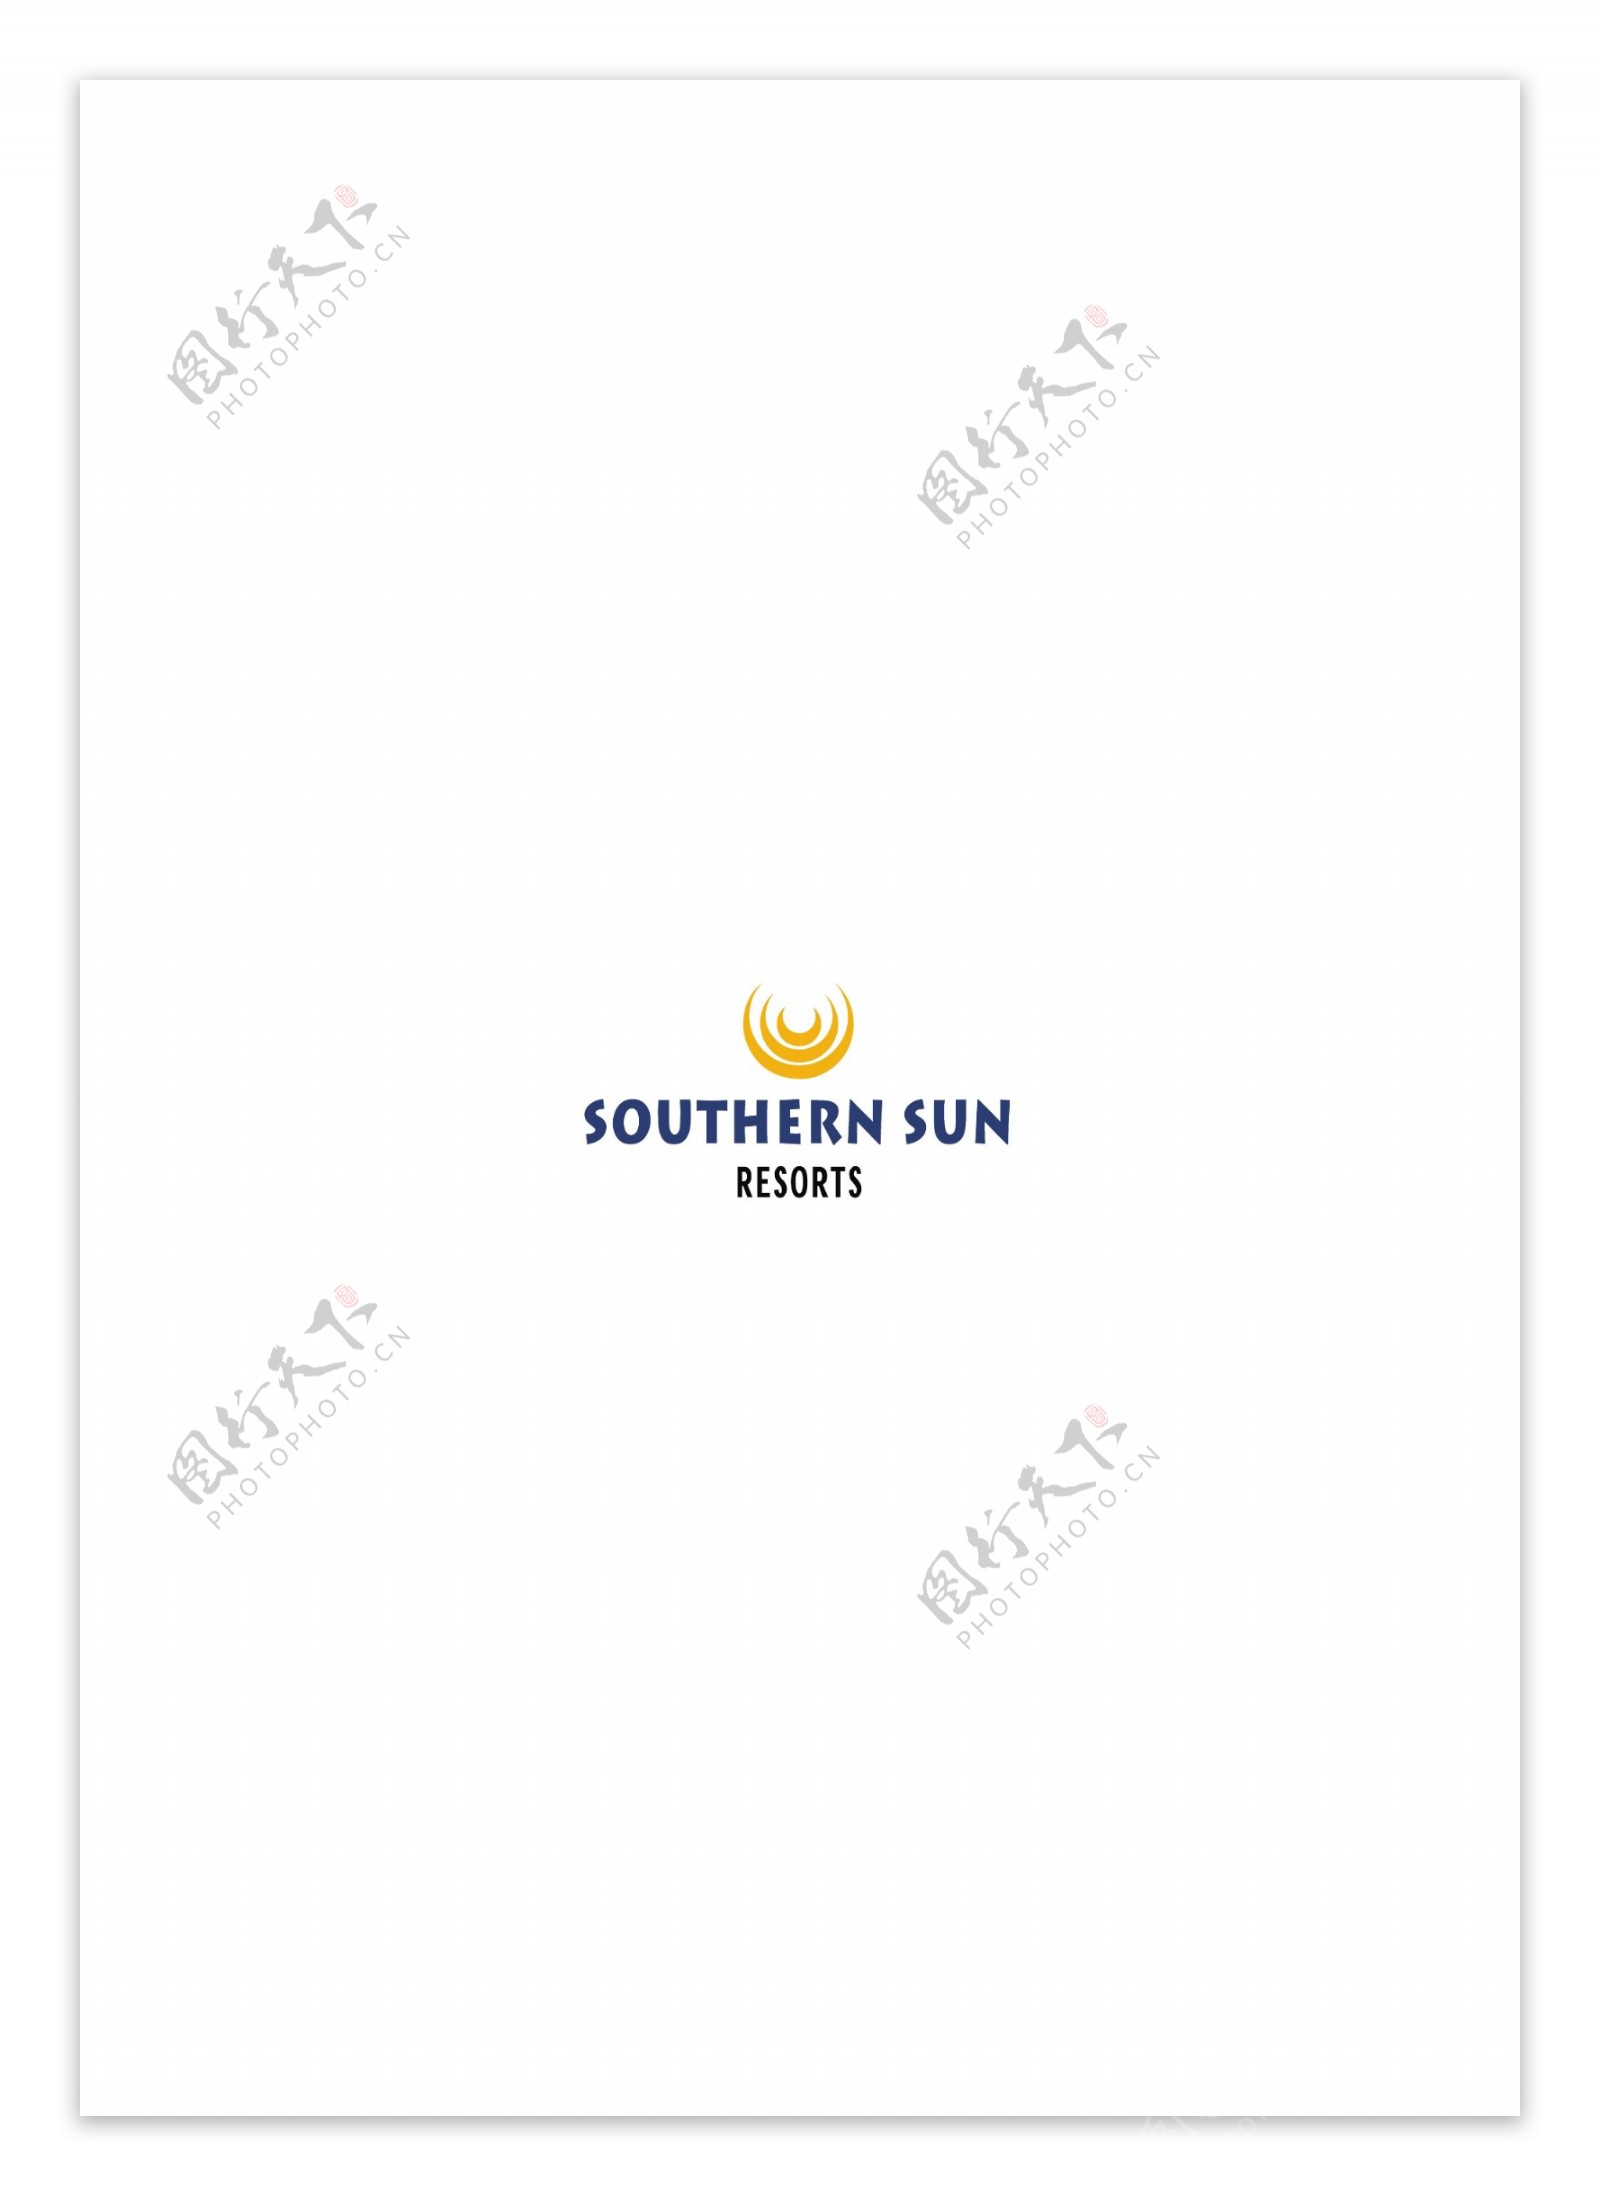 SouthernSunlogo设计欣赏SouthernSun大饭店标志下载标志设计欣赏